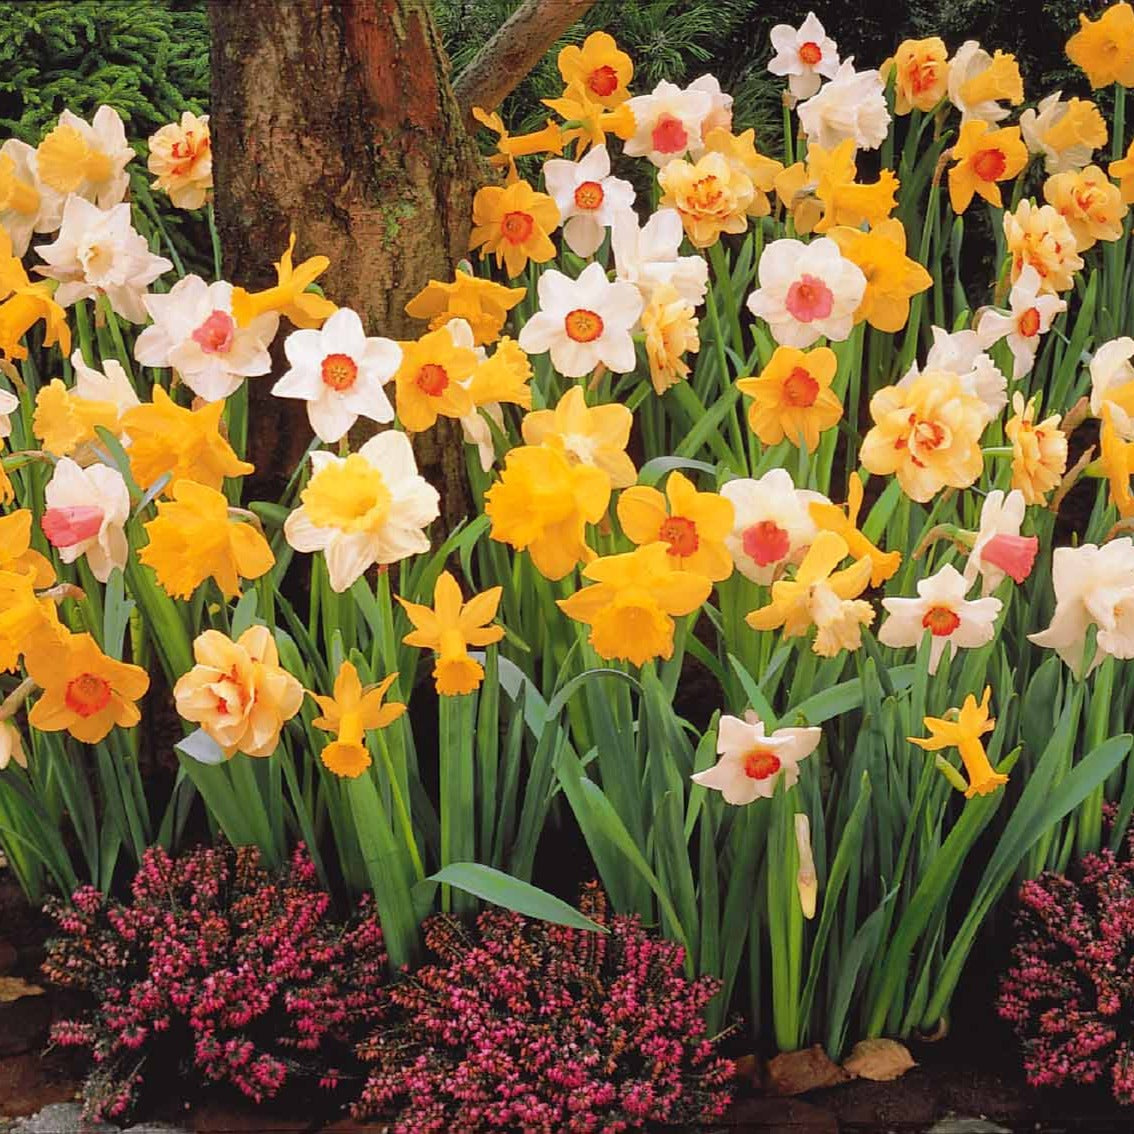 Narcisses en mélange - Narcissus - Bulbes de printemps